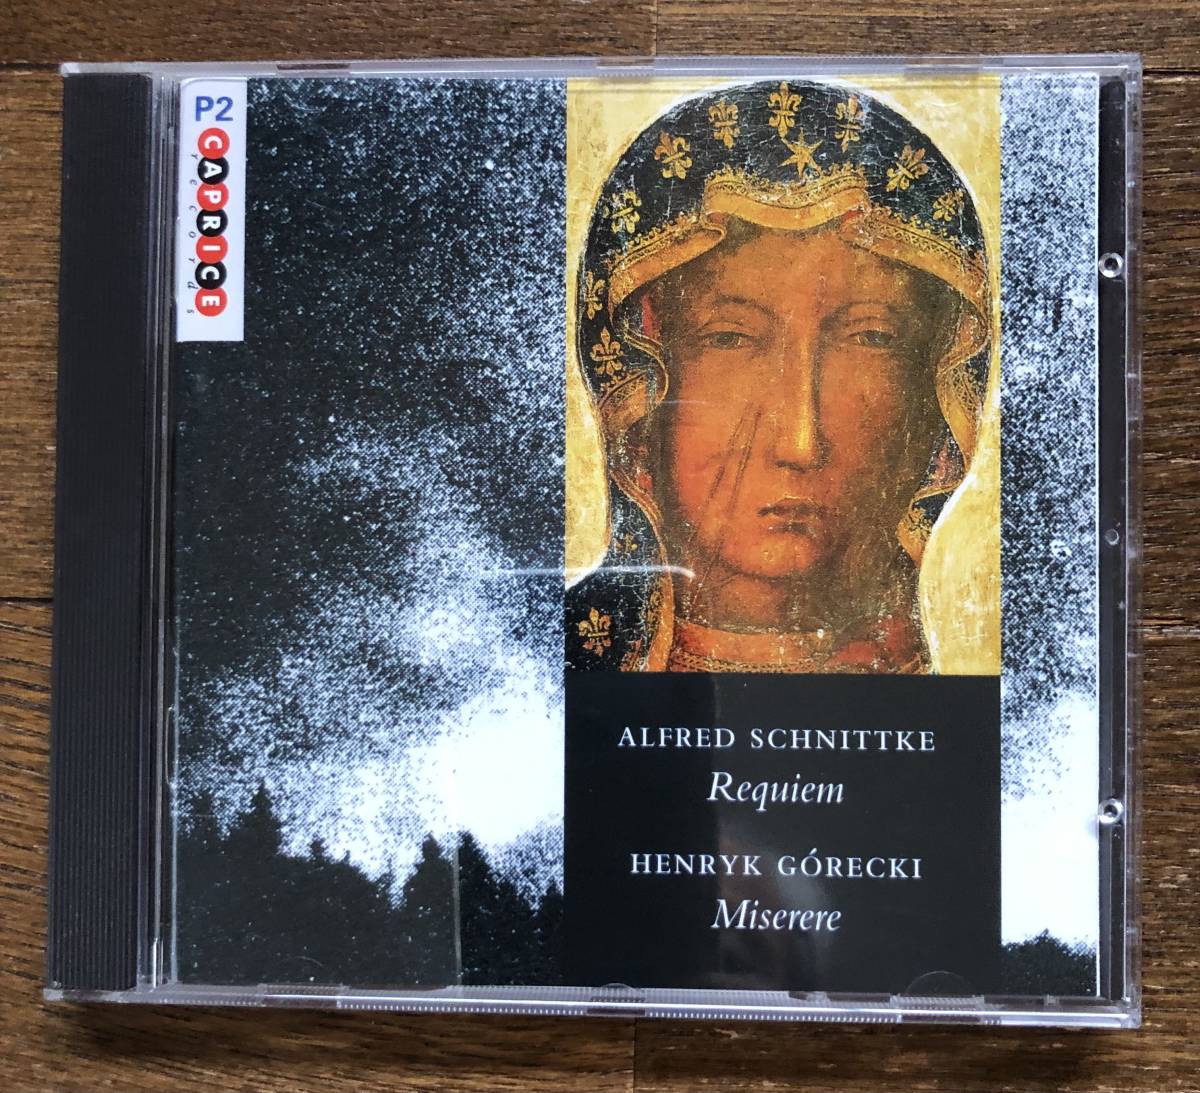 CD-Jan / Caprice Records / Henryk Gorecki Miserere / ALFRED SCHNITTKE_Requiem